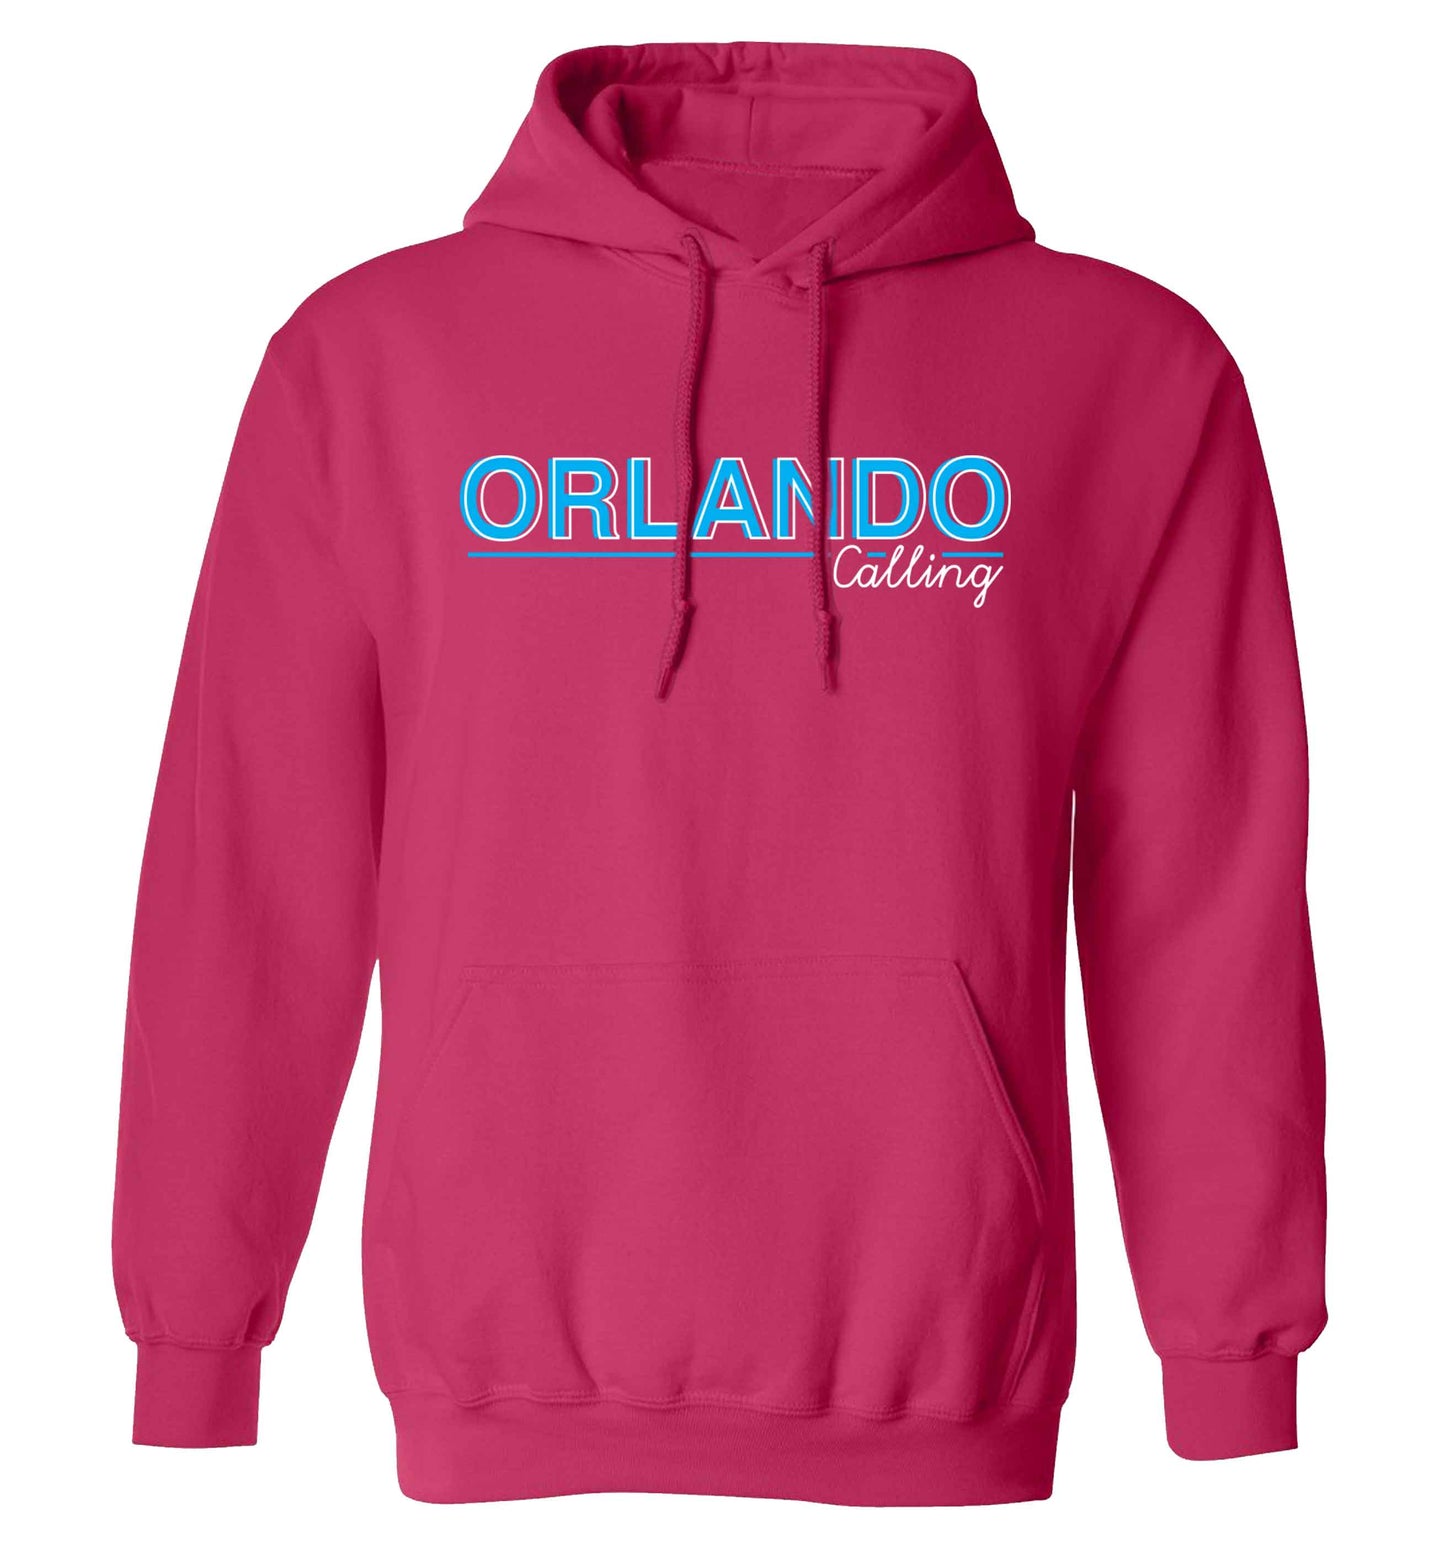 Orlando calling adults unisex pink hoodie 2XL